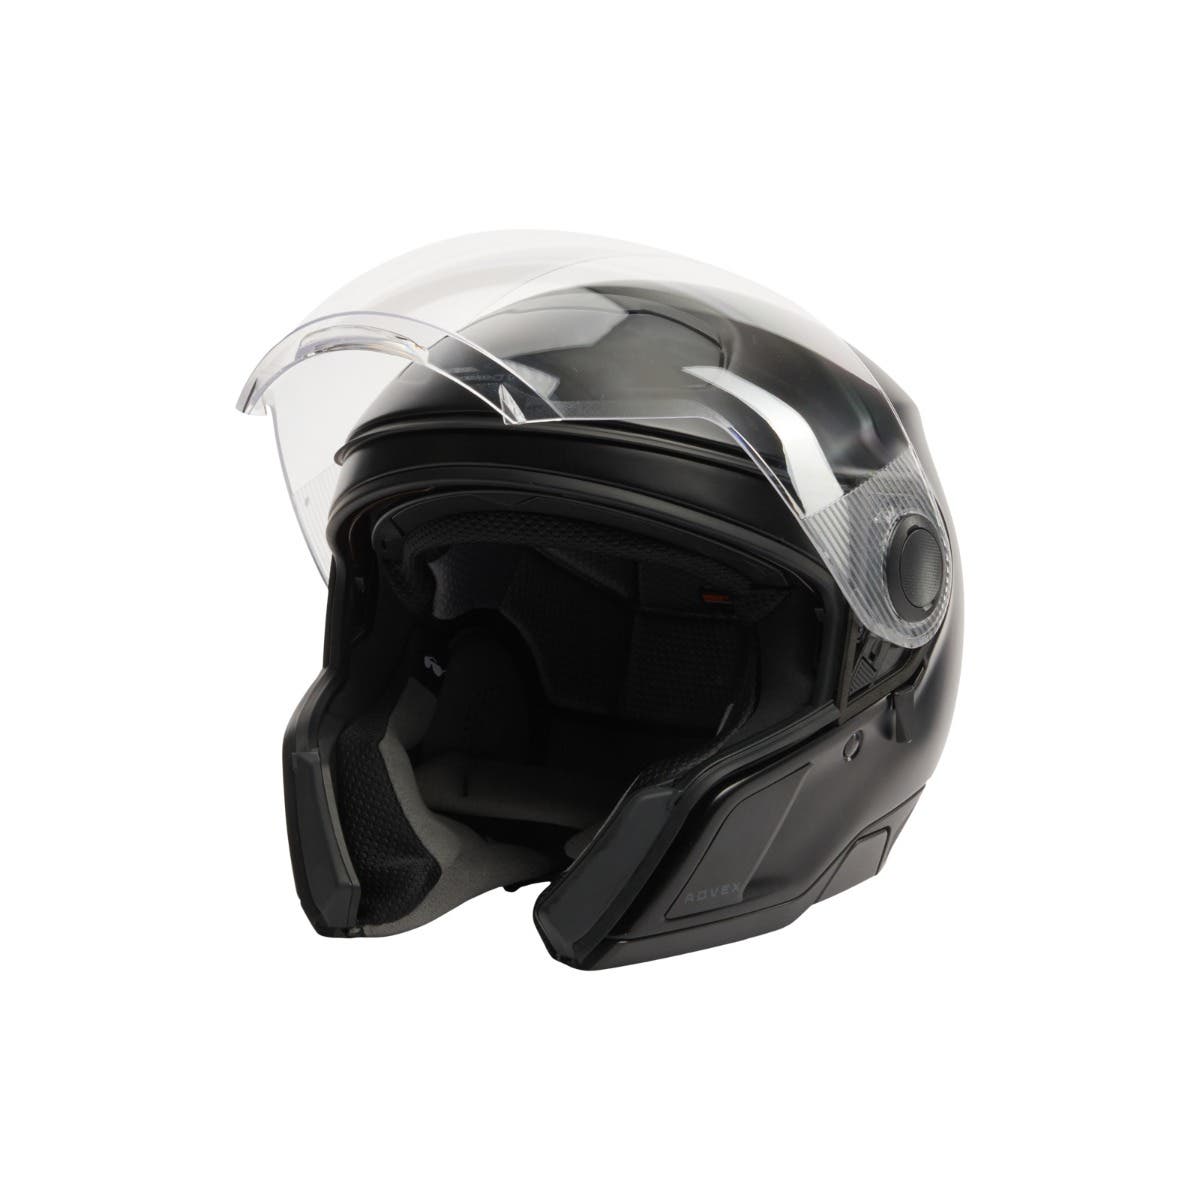 Advex Jet Helmet (DOT/ECE)